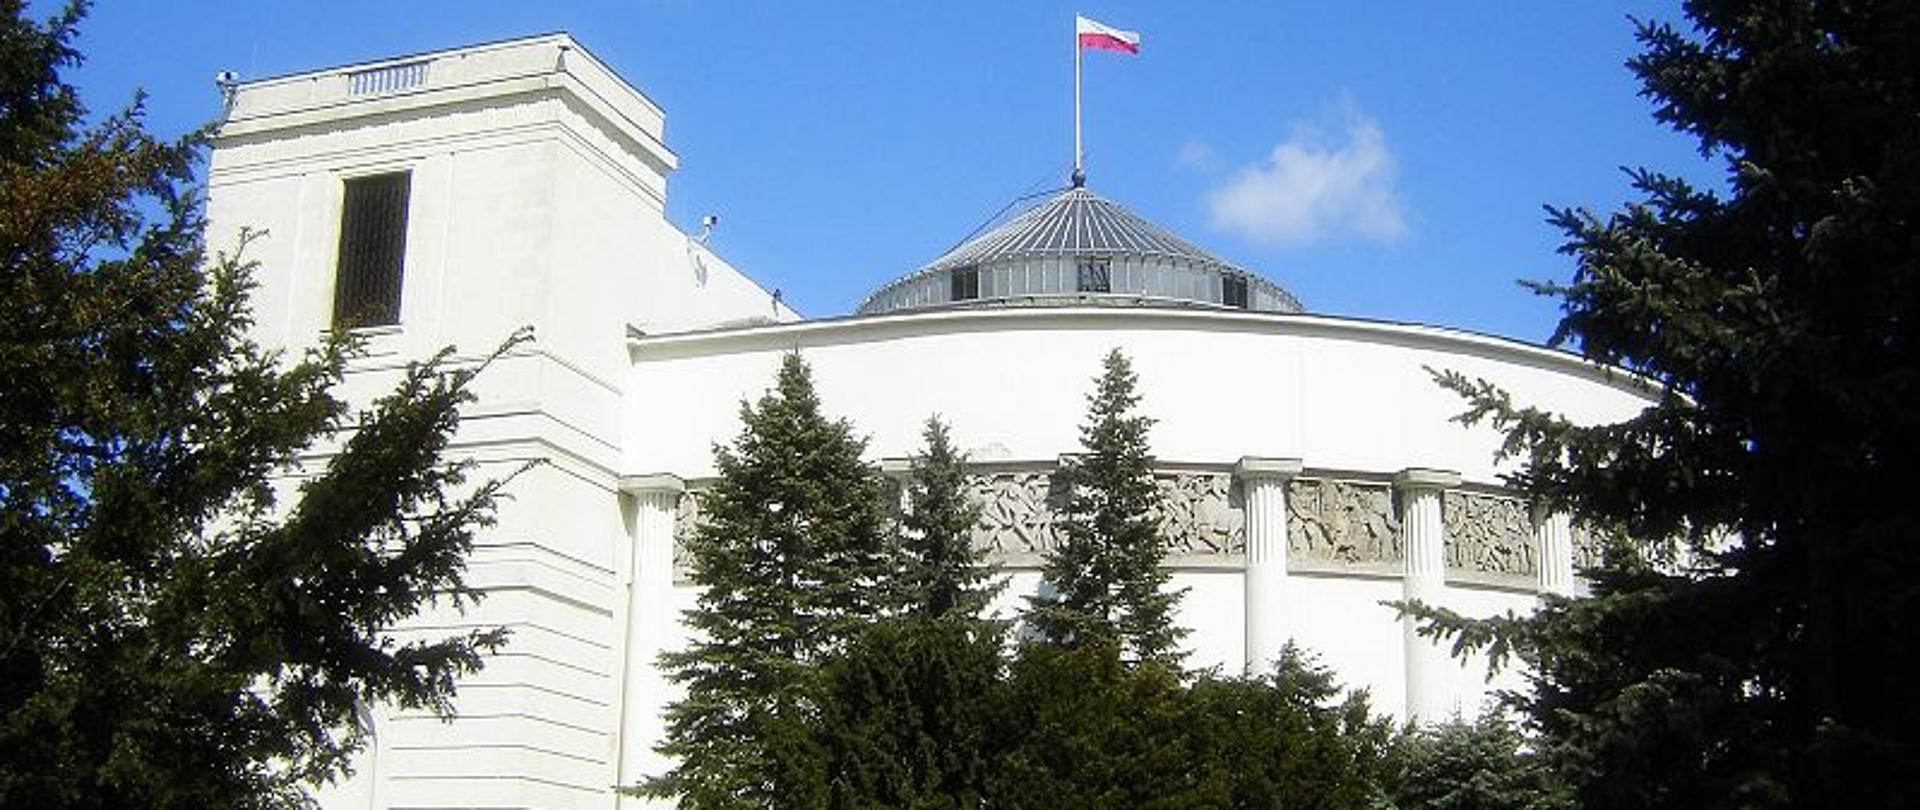 Budynek Sejmu RP w lecie